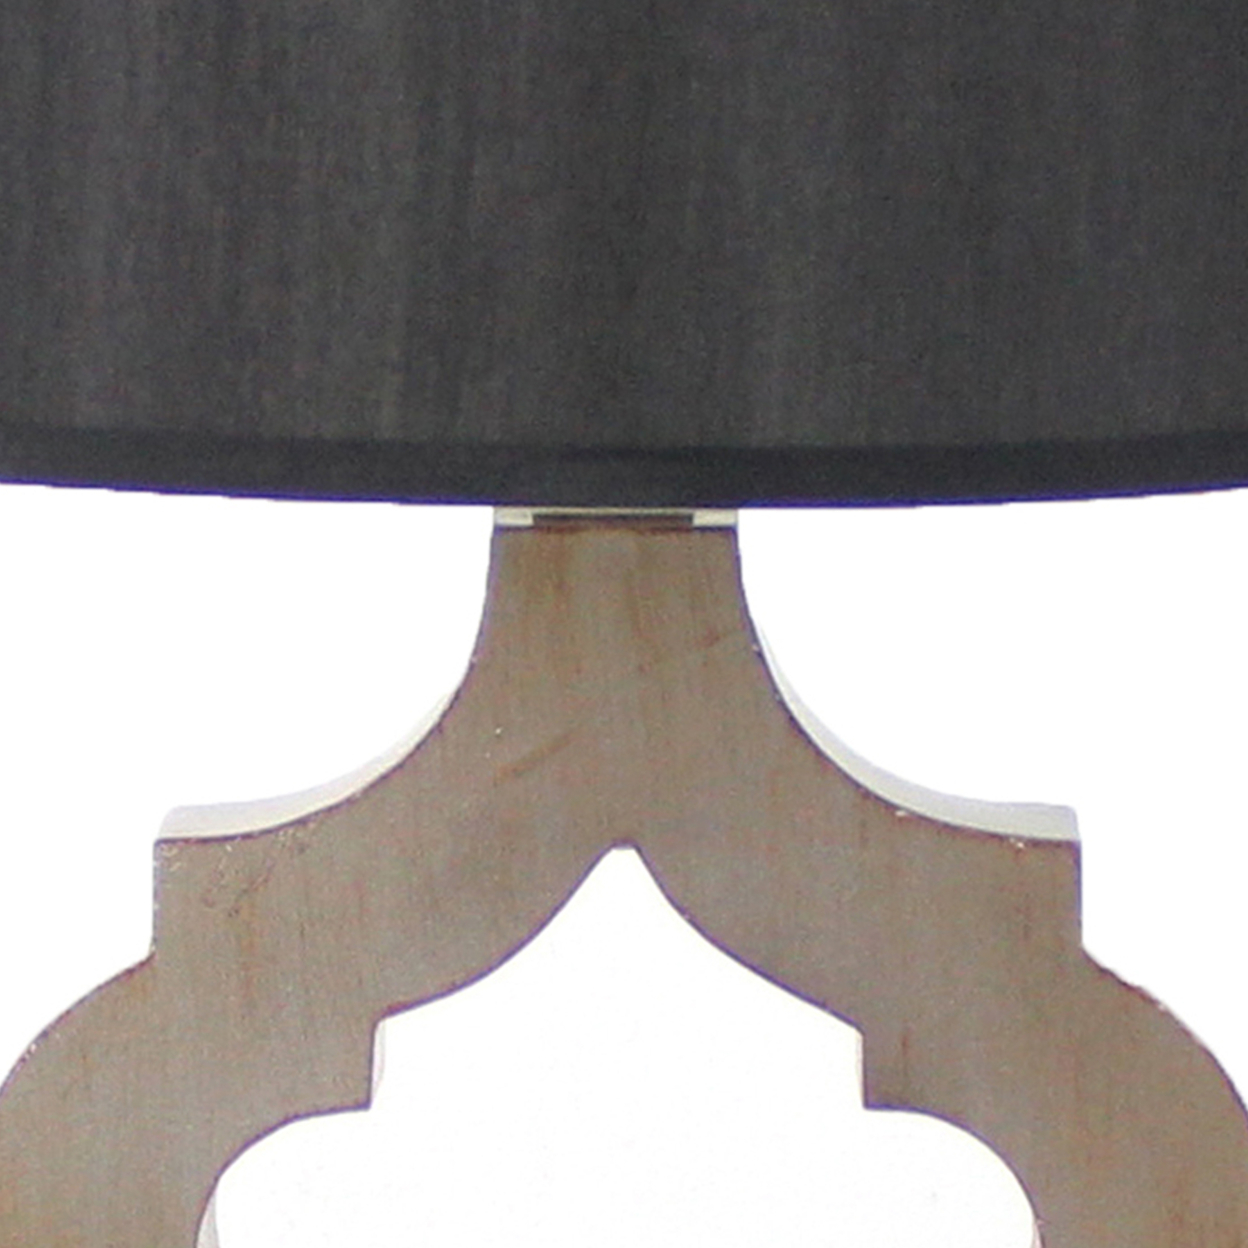 Wooden Table Lamp With Quatrefoil Design Base, Black And Antique White- Saltoro Sherpi